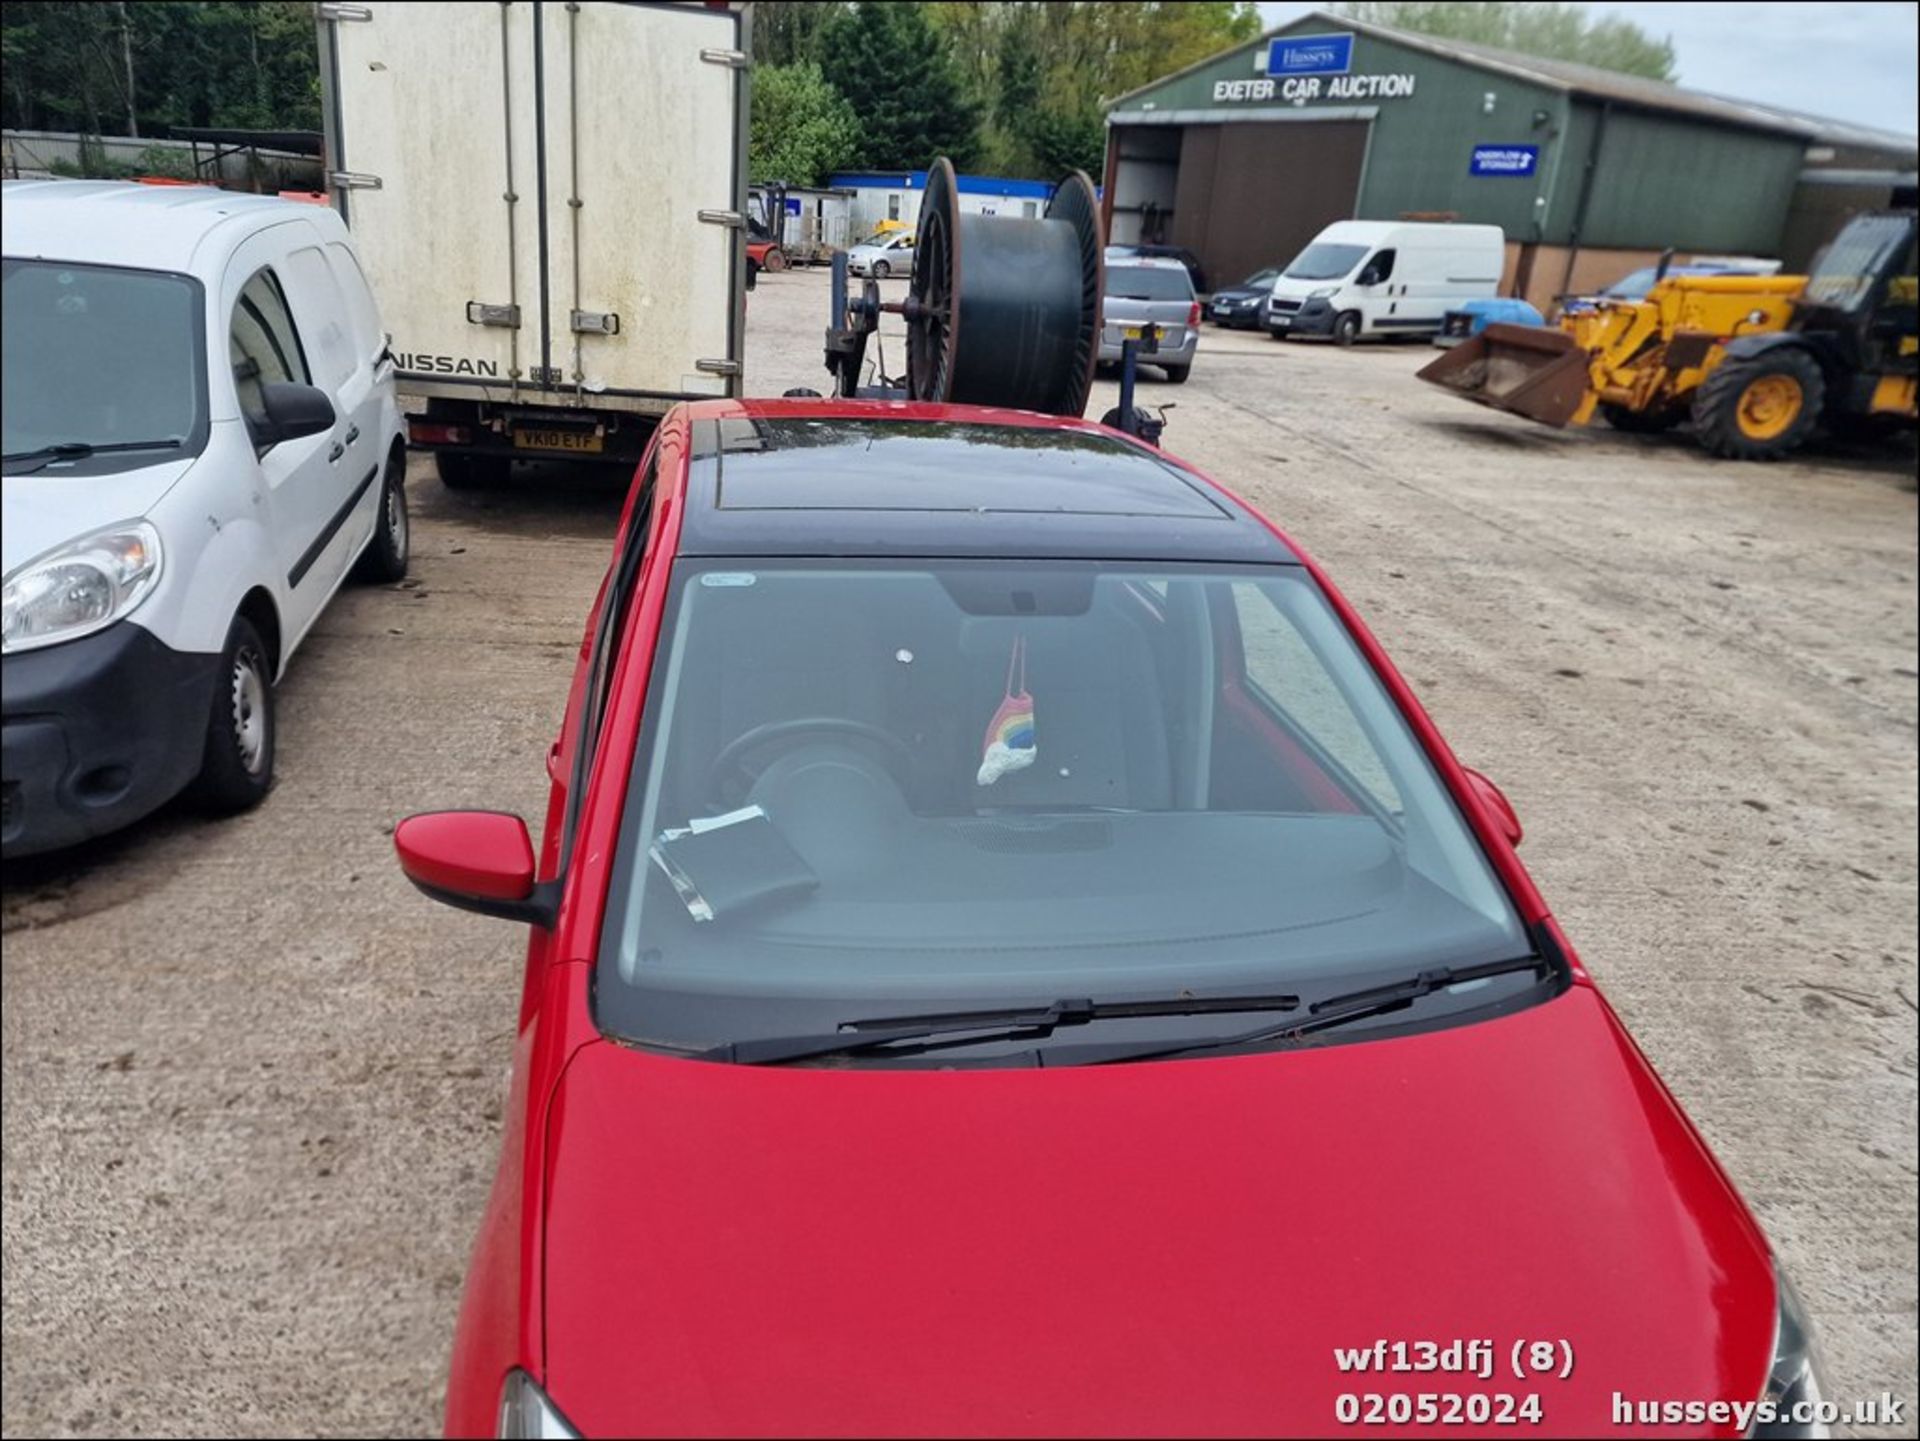 13/13 VOLKSWAGEN MOVE UP AUTO - 999cc 5dr Hatchback (Red, 17k) - Image 9 of 46